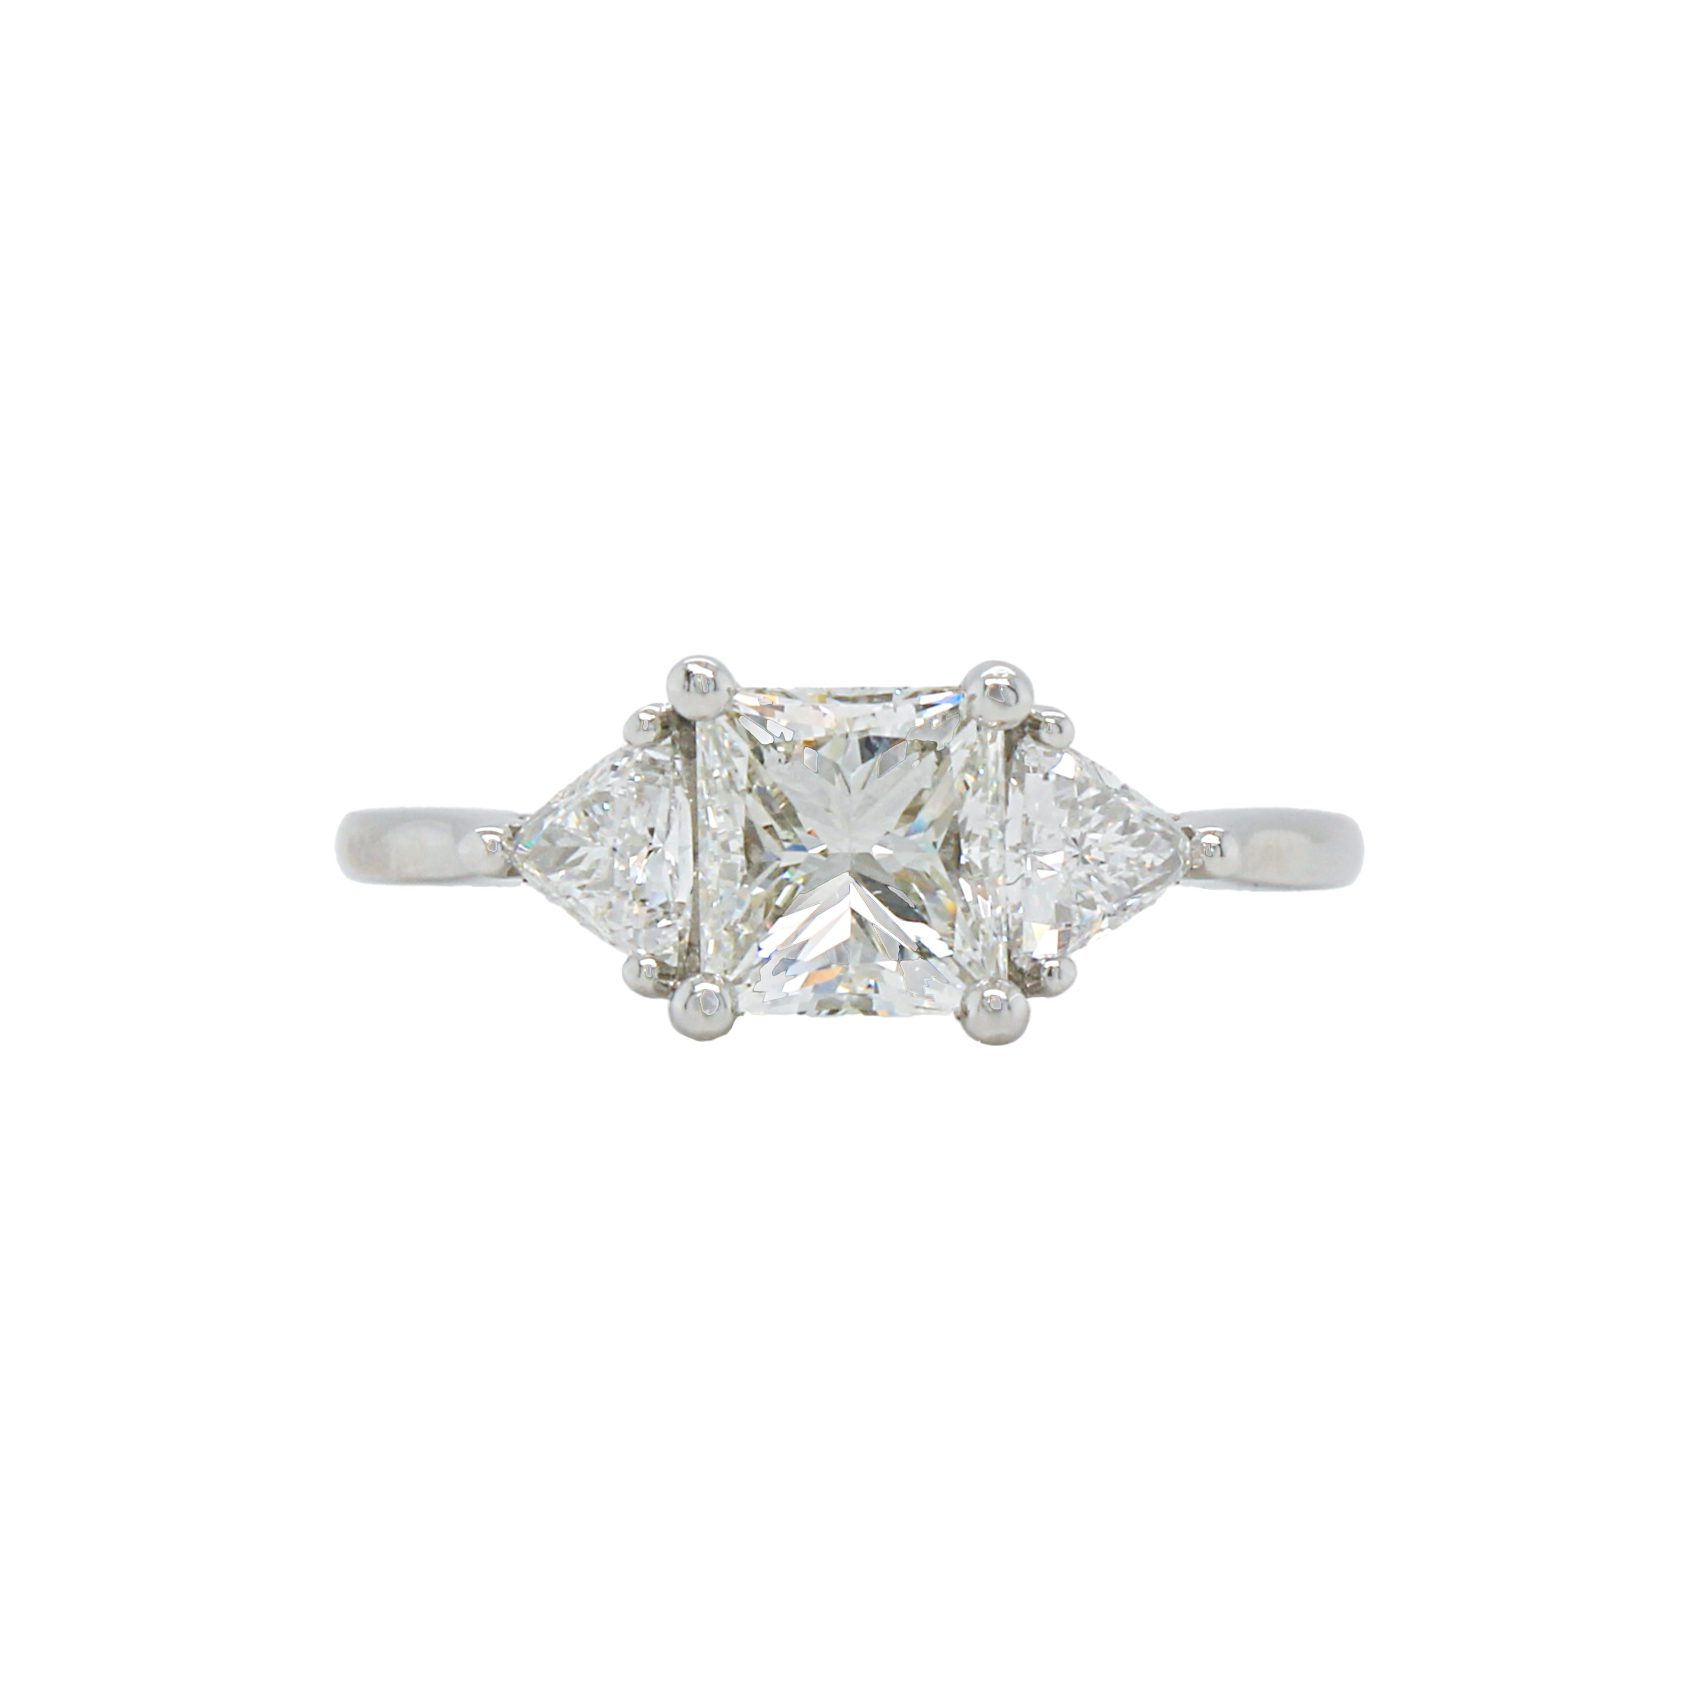 1.88 Ct Princess Cut Diamond Engagement Ring W/ Trillion Cut Side Diamonds,  Princess Cut Diamond Ring, Halo Engagement Ring, 14k White Gold - Etsy